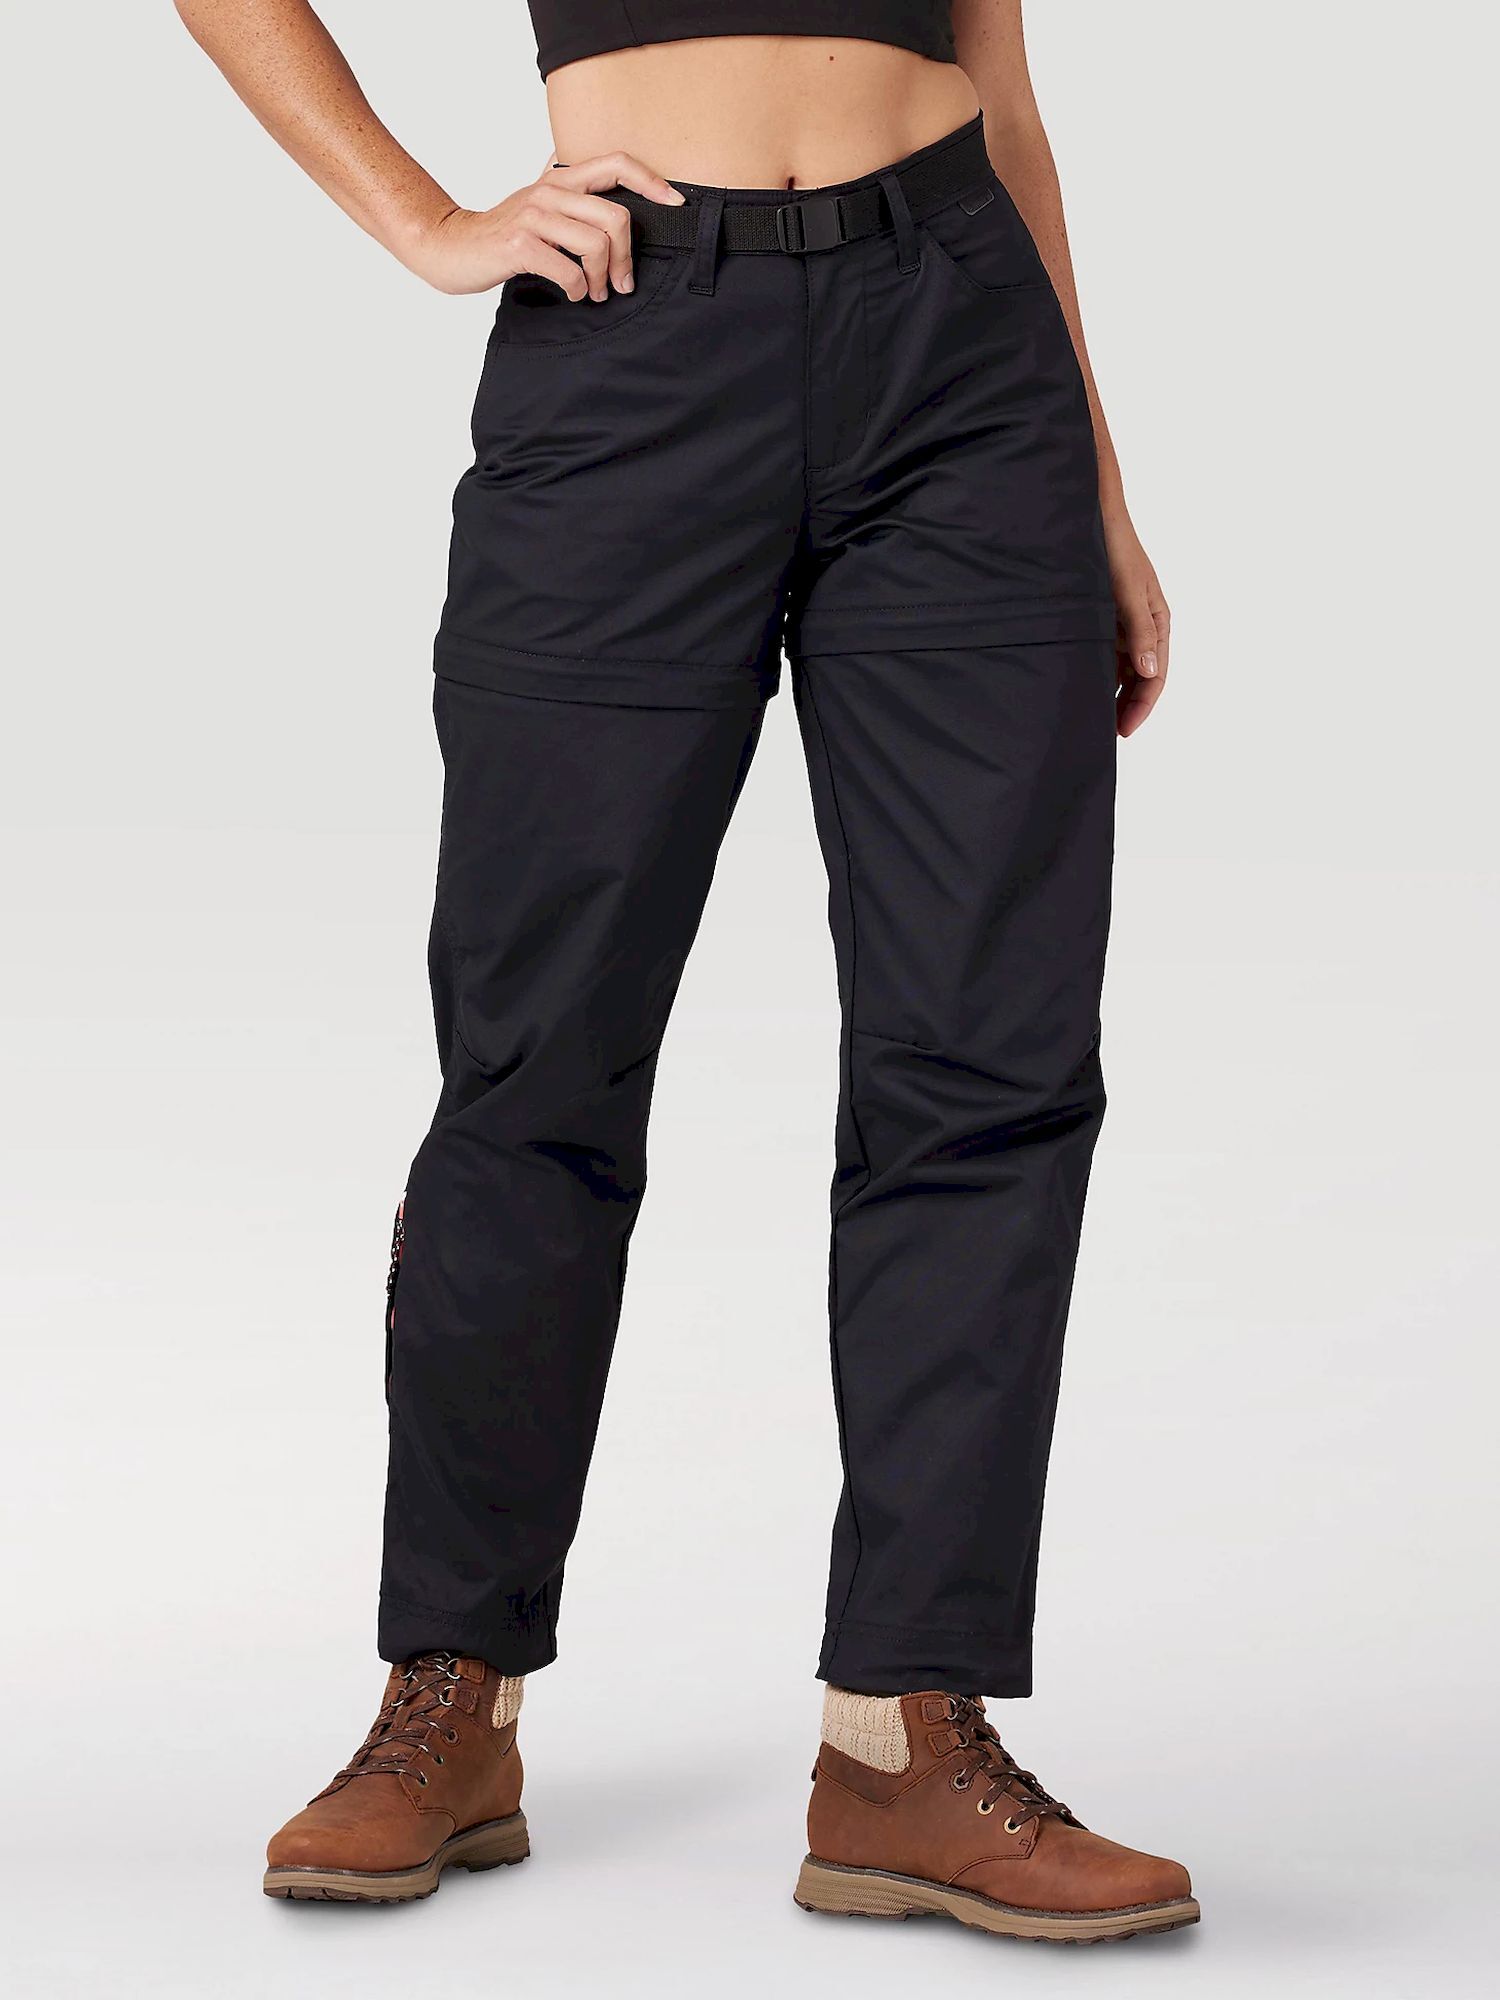 Wrangler All Terrain Gear Packable Zipoff Pant - Pantalones de senderismo - Mujer | Hardloop